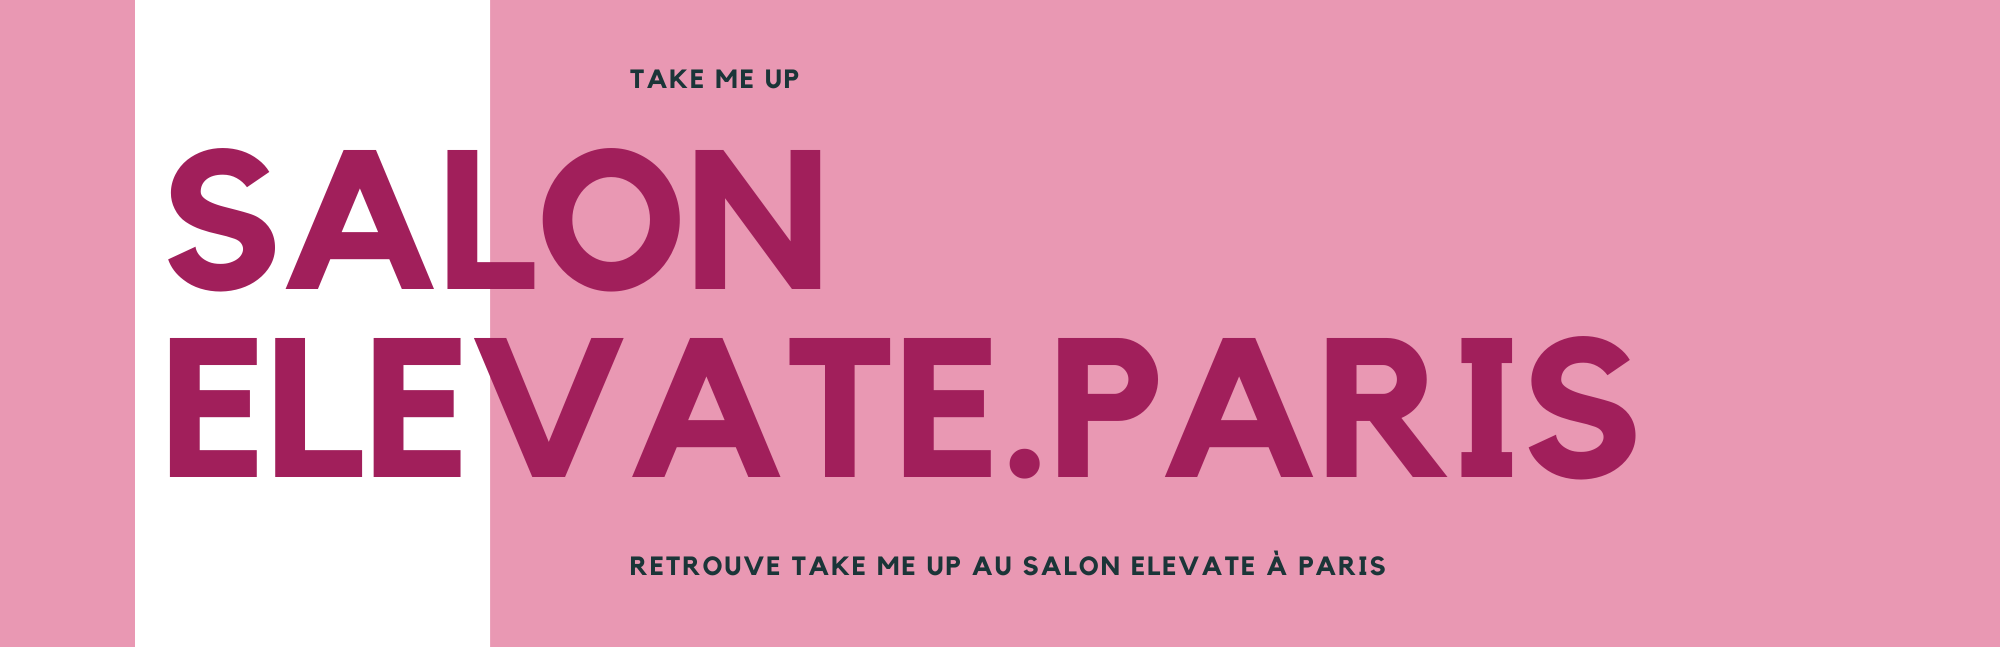 Headers Salon Elevate Paris